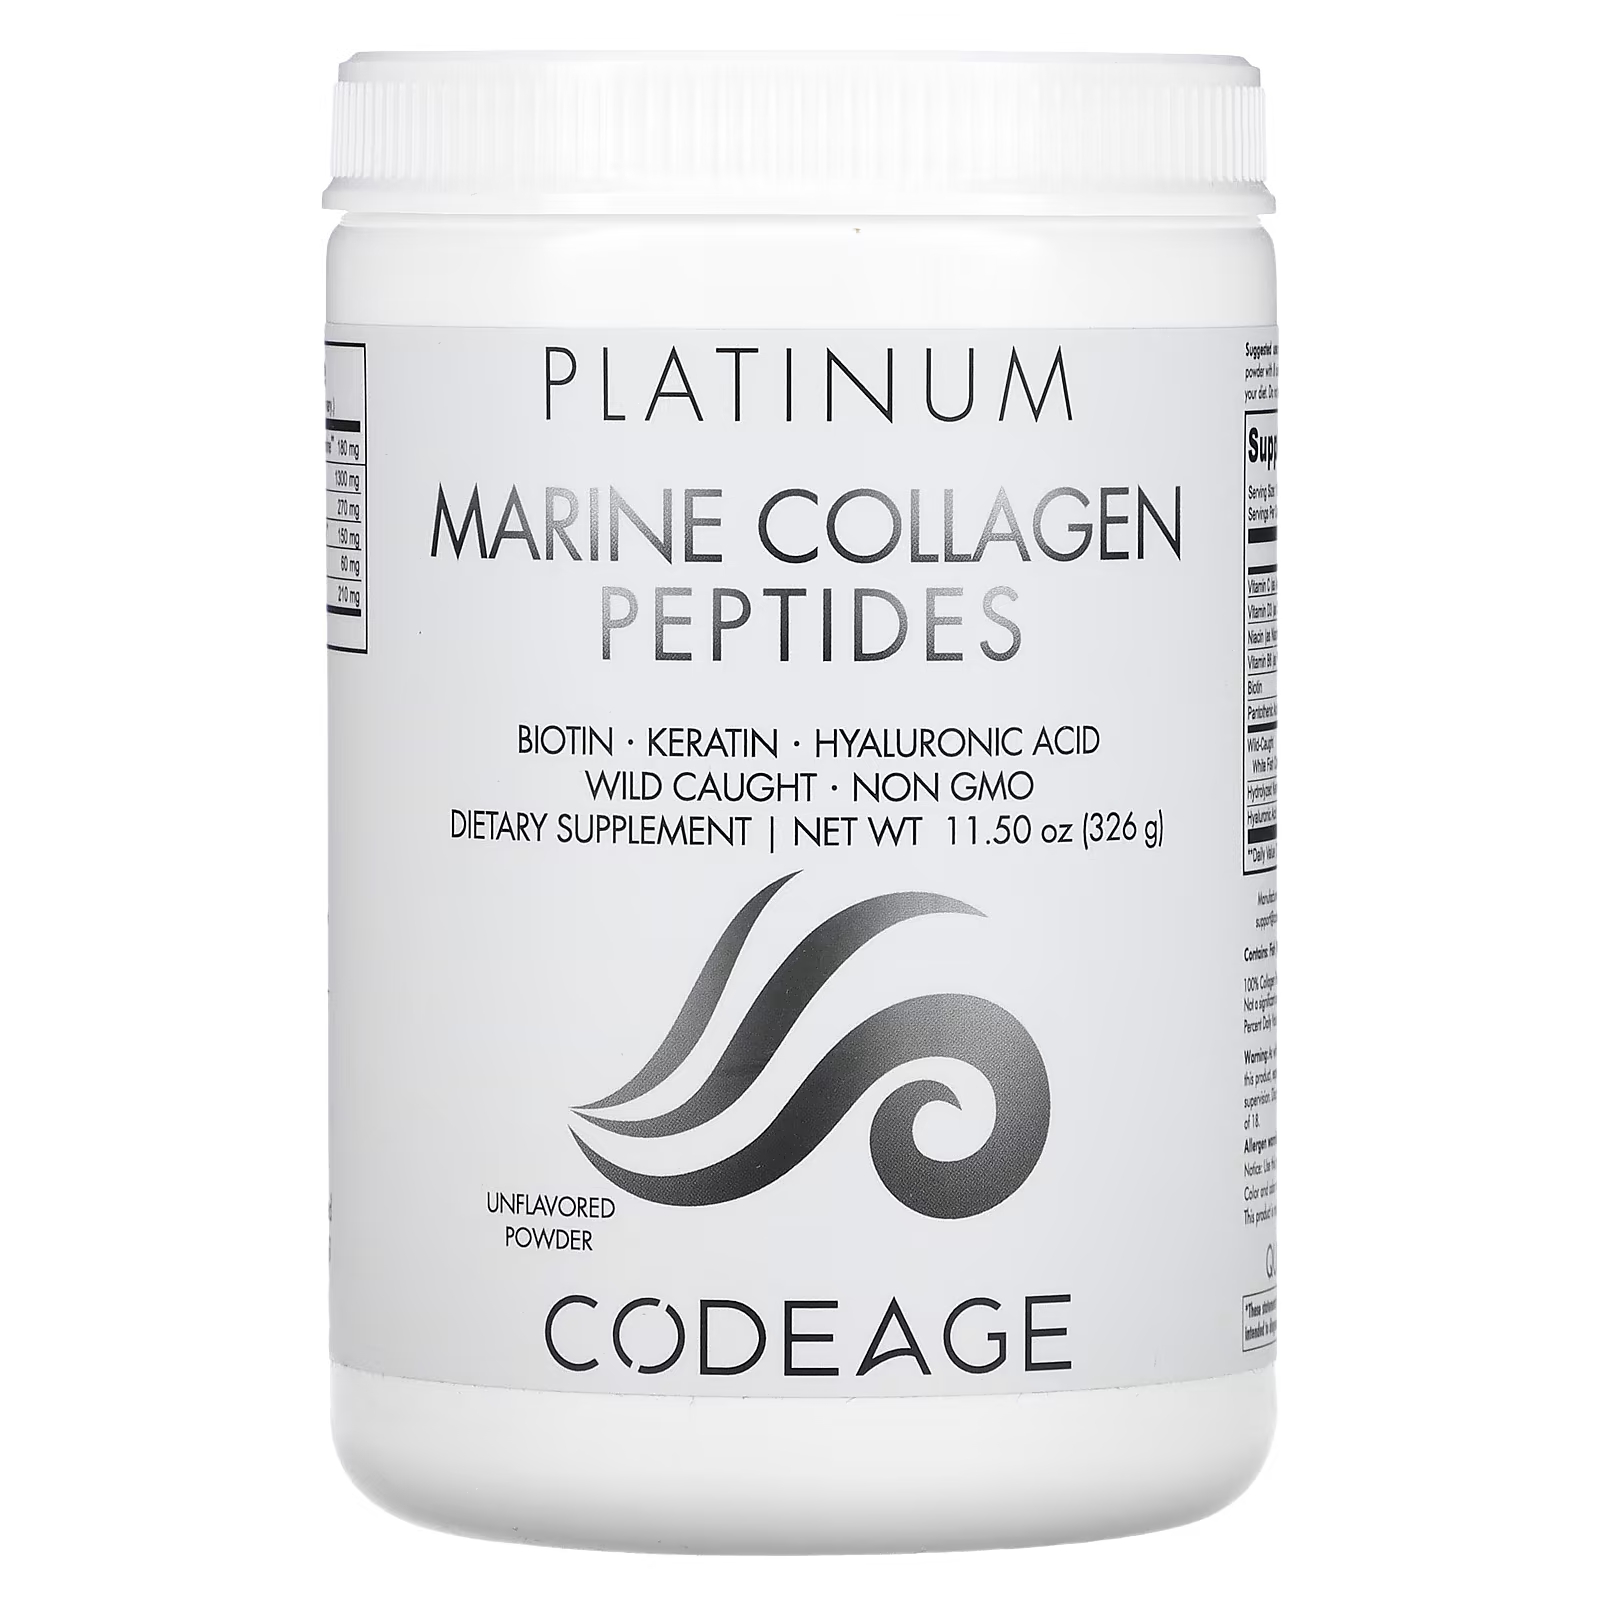 Пищевая добавка Codeage Platinum пептиды морского коллагена без вкуса, 326г цена и фото